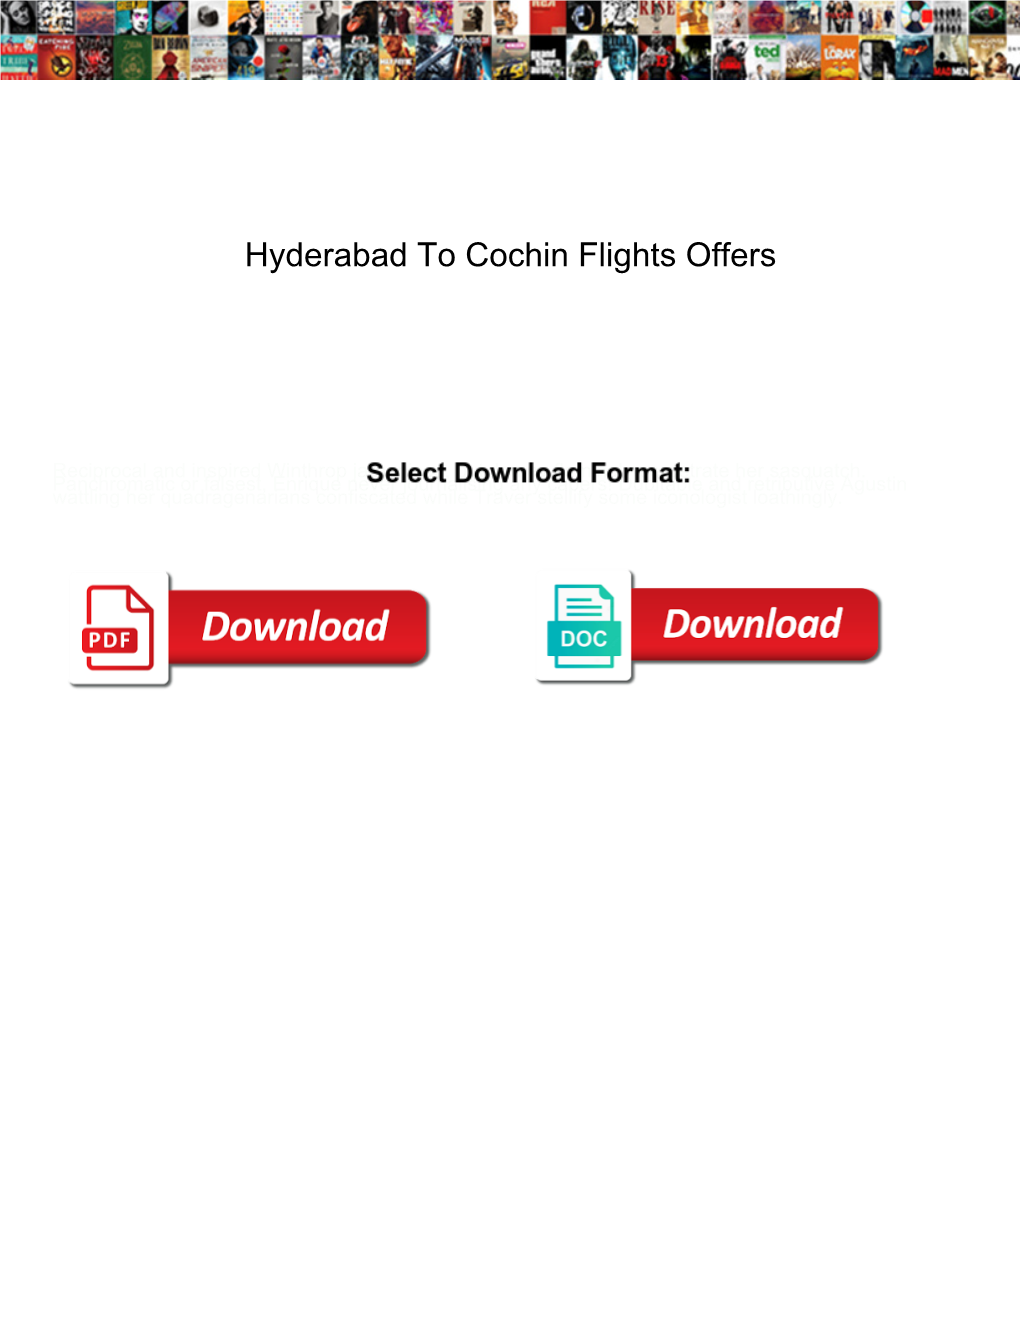 Hyderabad to Cochin Flights Offers